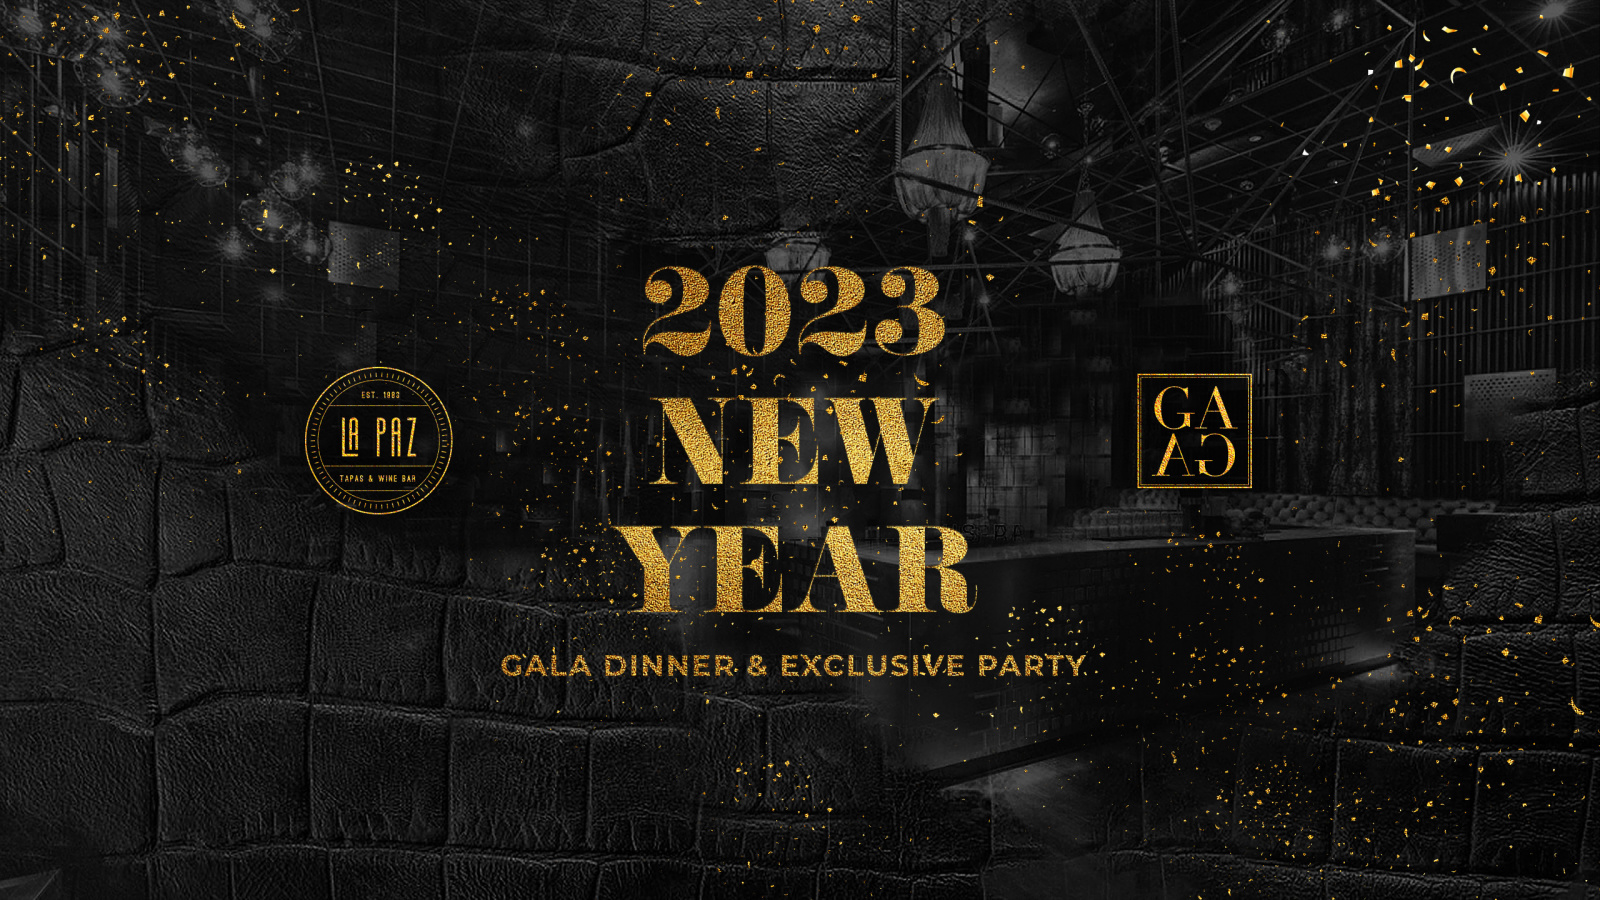 New Year's Eve 2023 by GAGA & LA PAZ